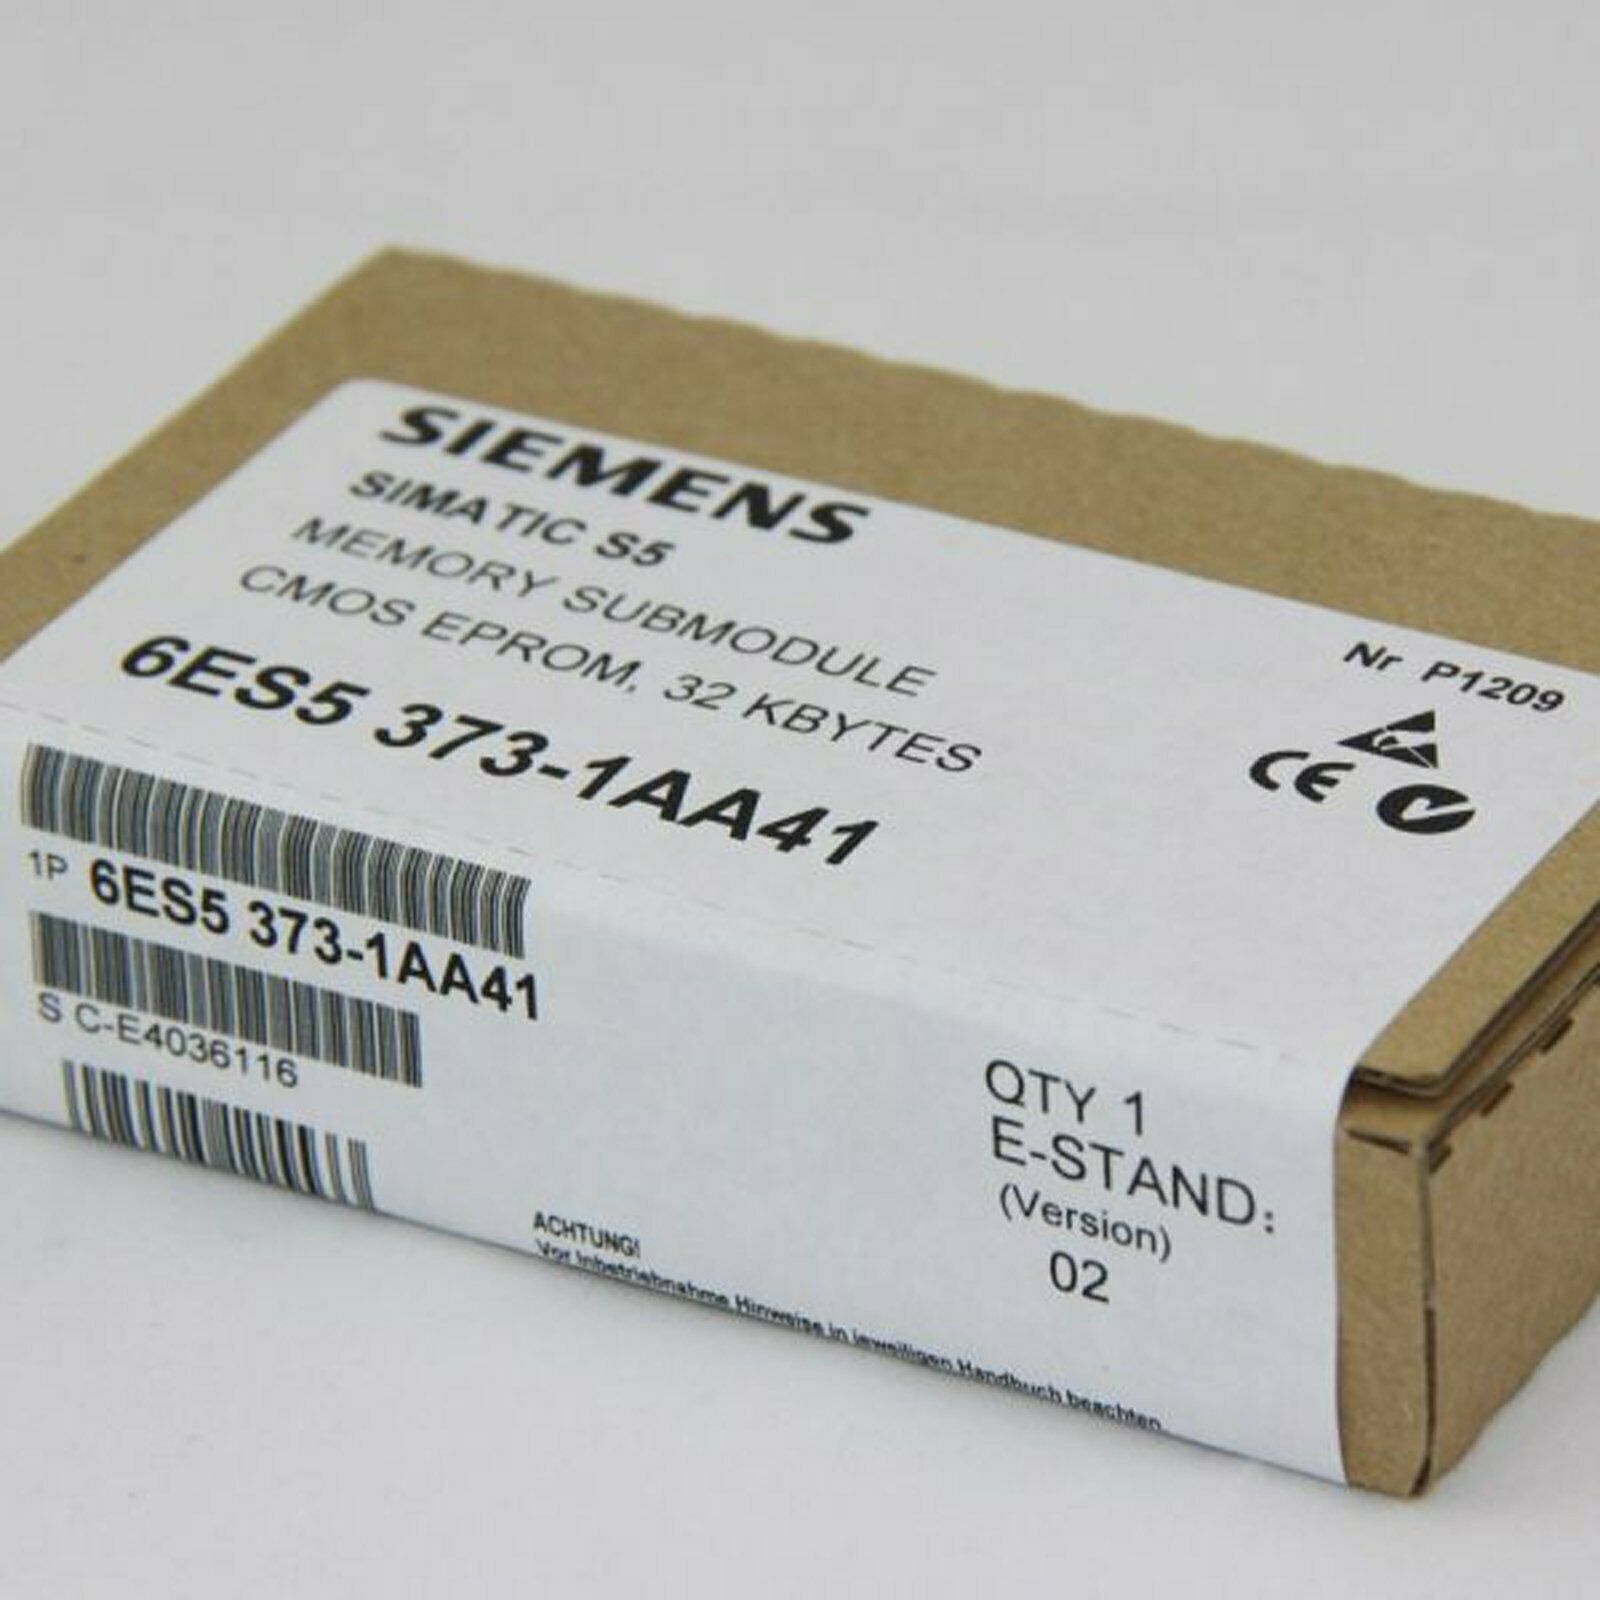 new ONE  In Box Siemens 6ES5373-1AA41 6ES5 373-1AA41 One year